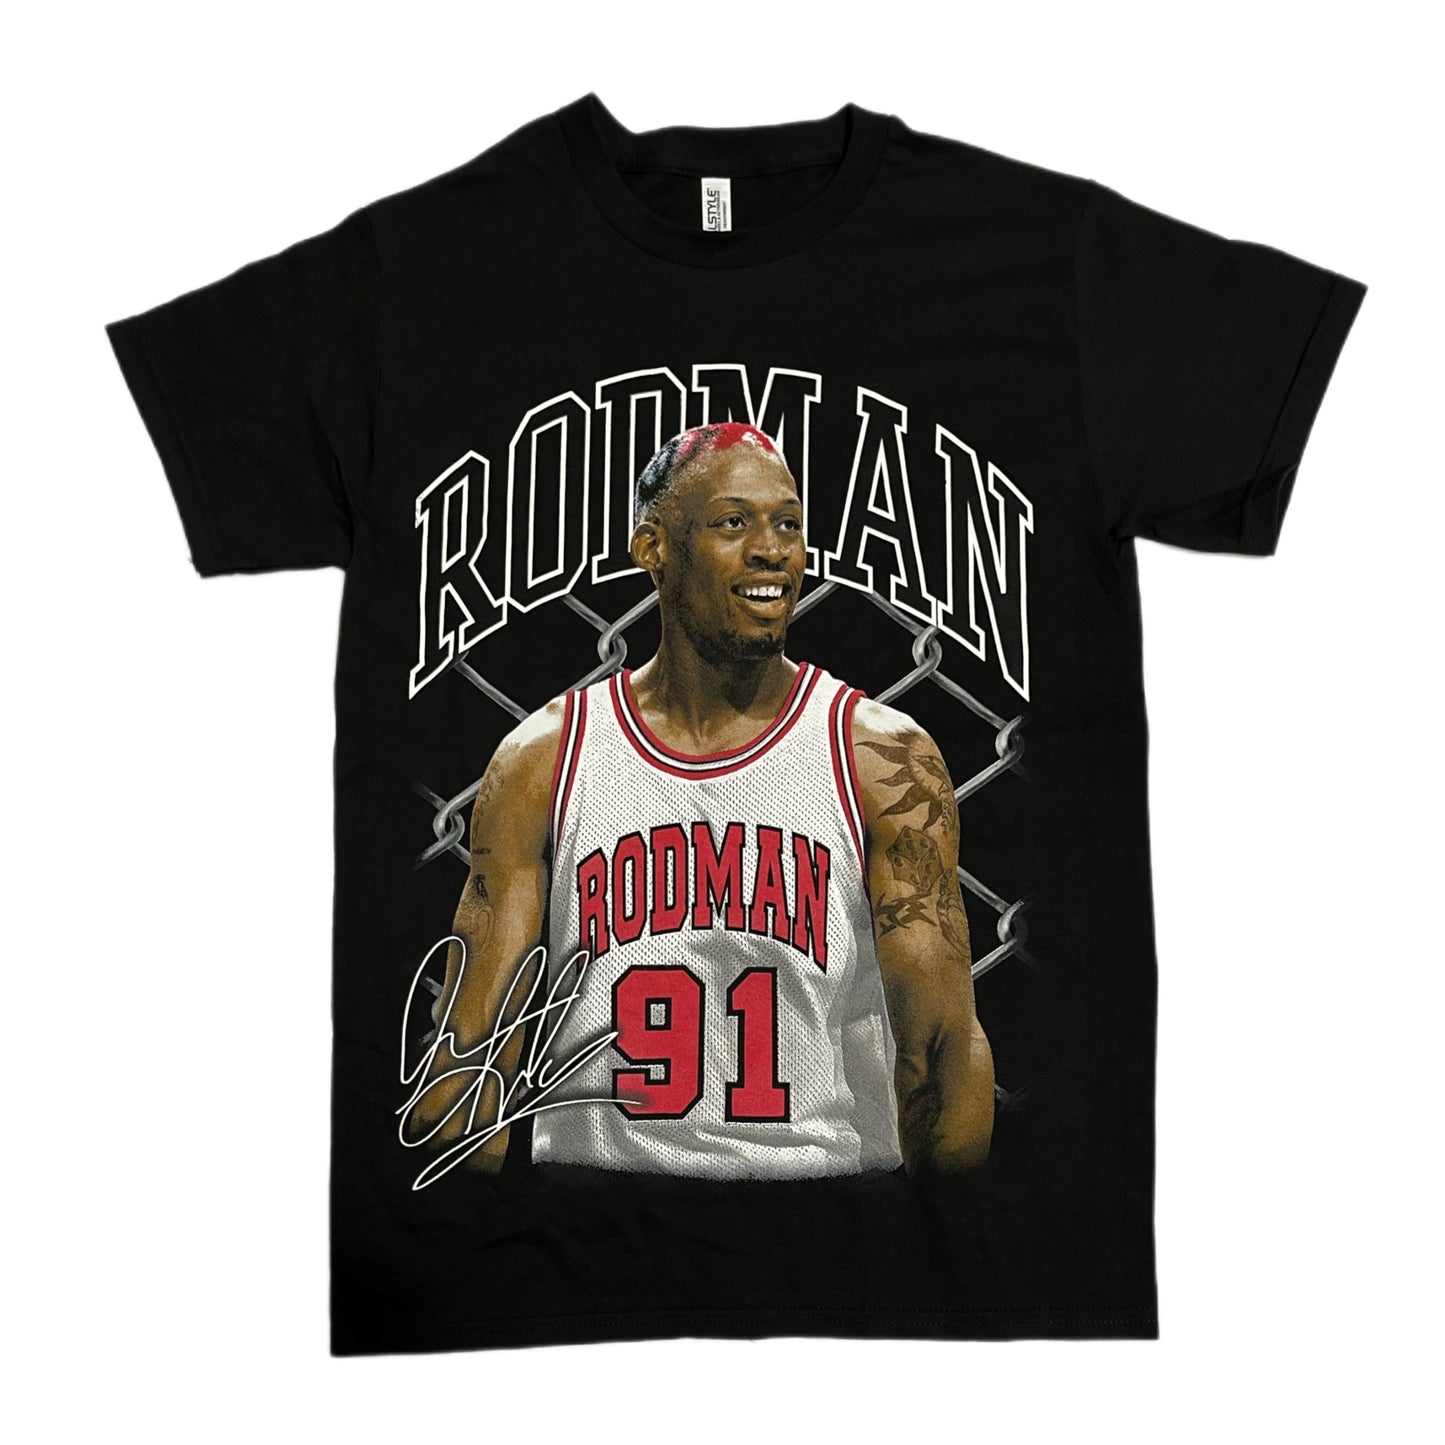 Rodman #91 Graphic Tee